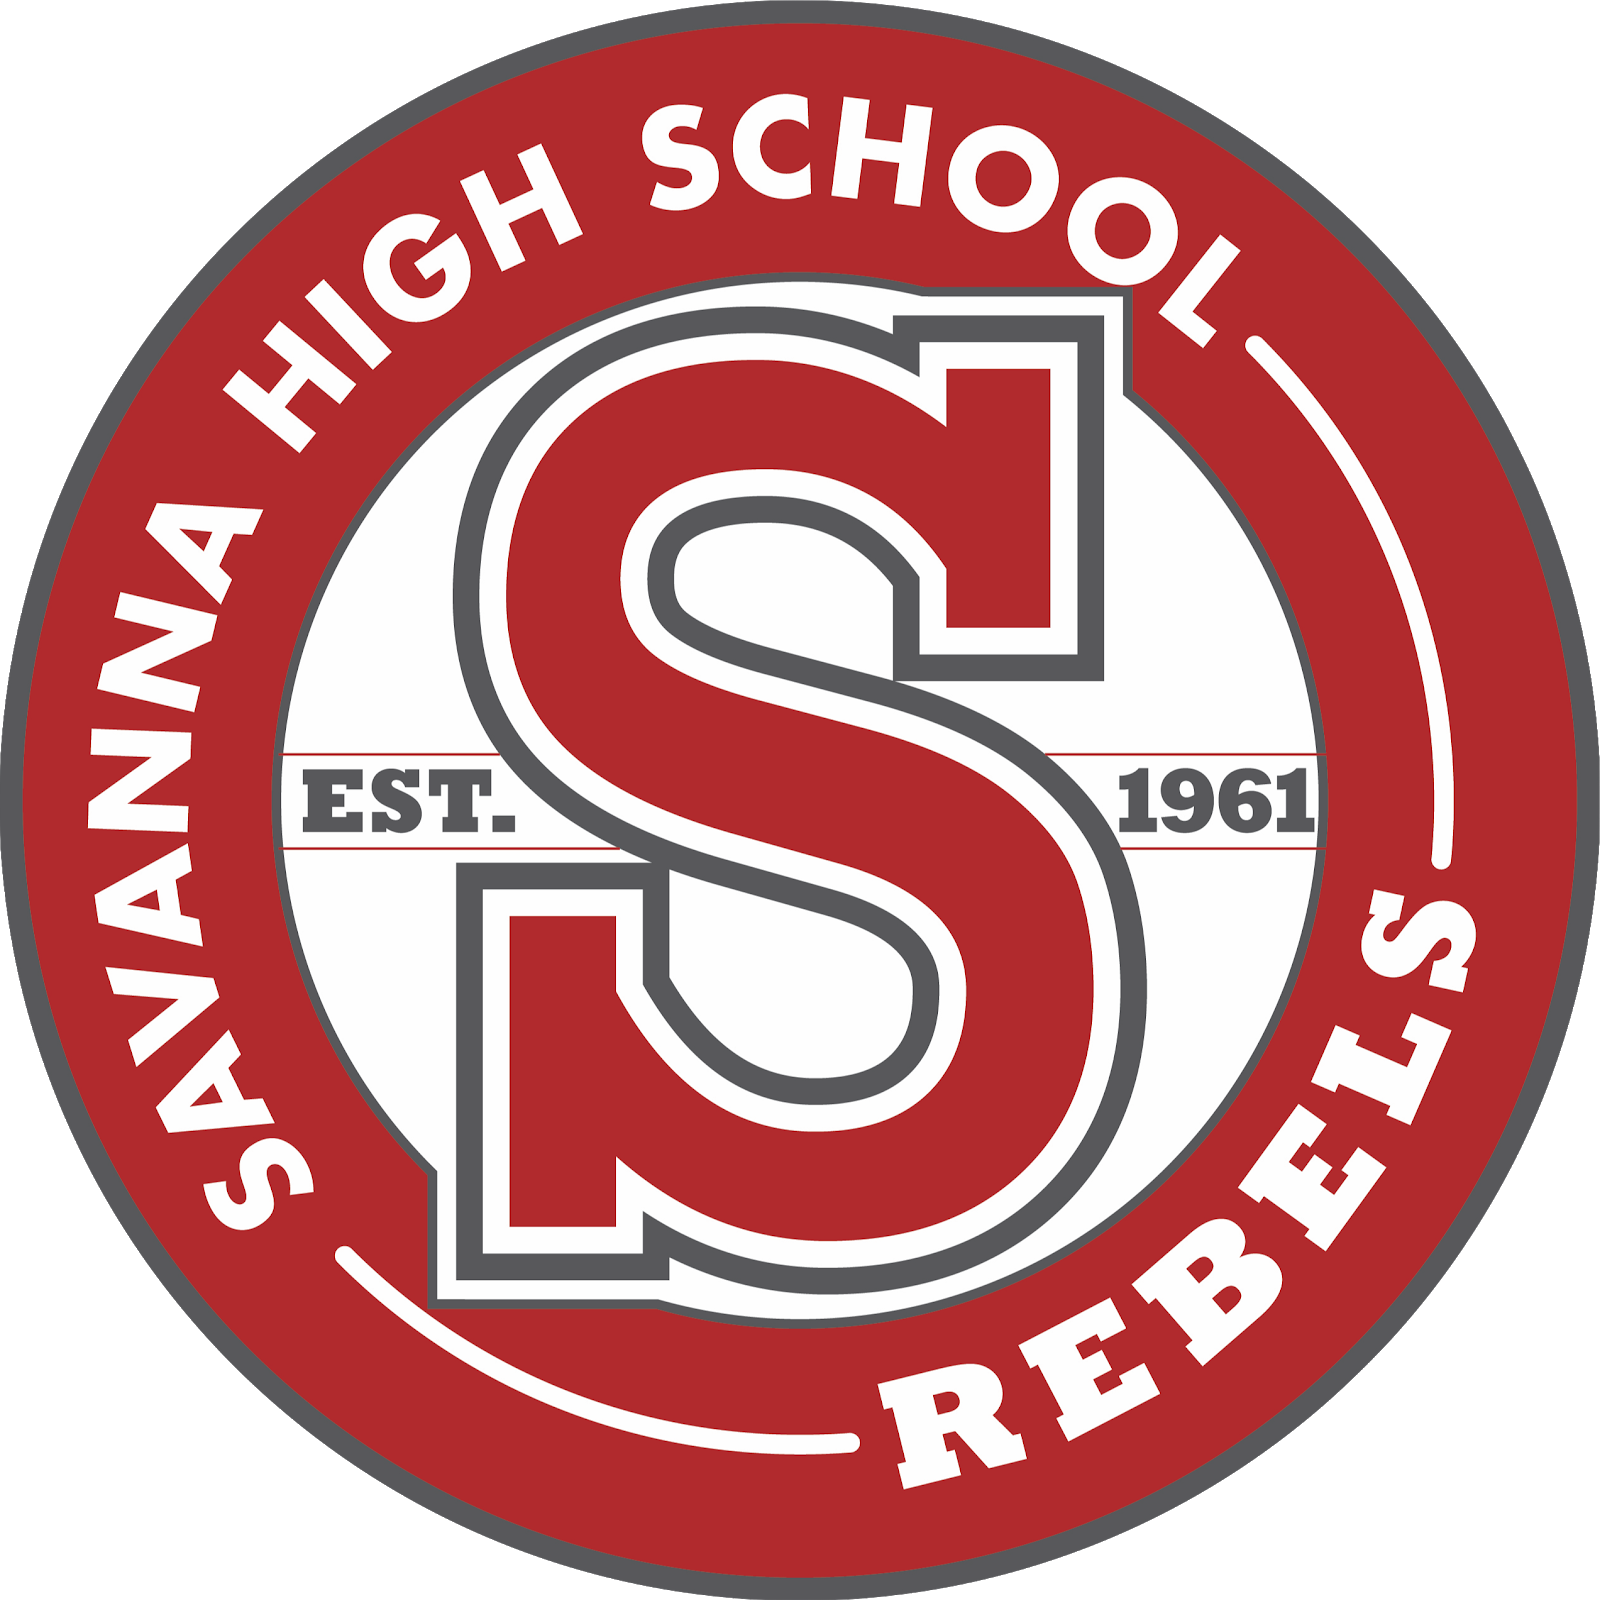 Savanna High School Anaheim, CA Products - Graduation Products from Jostens